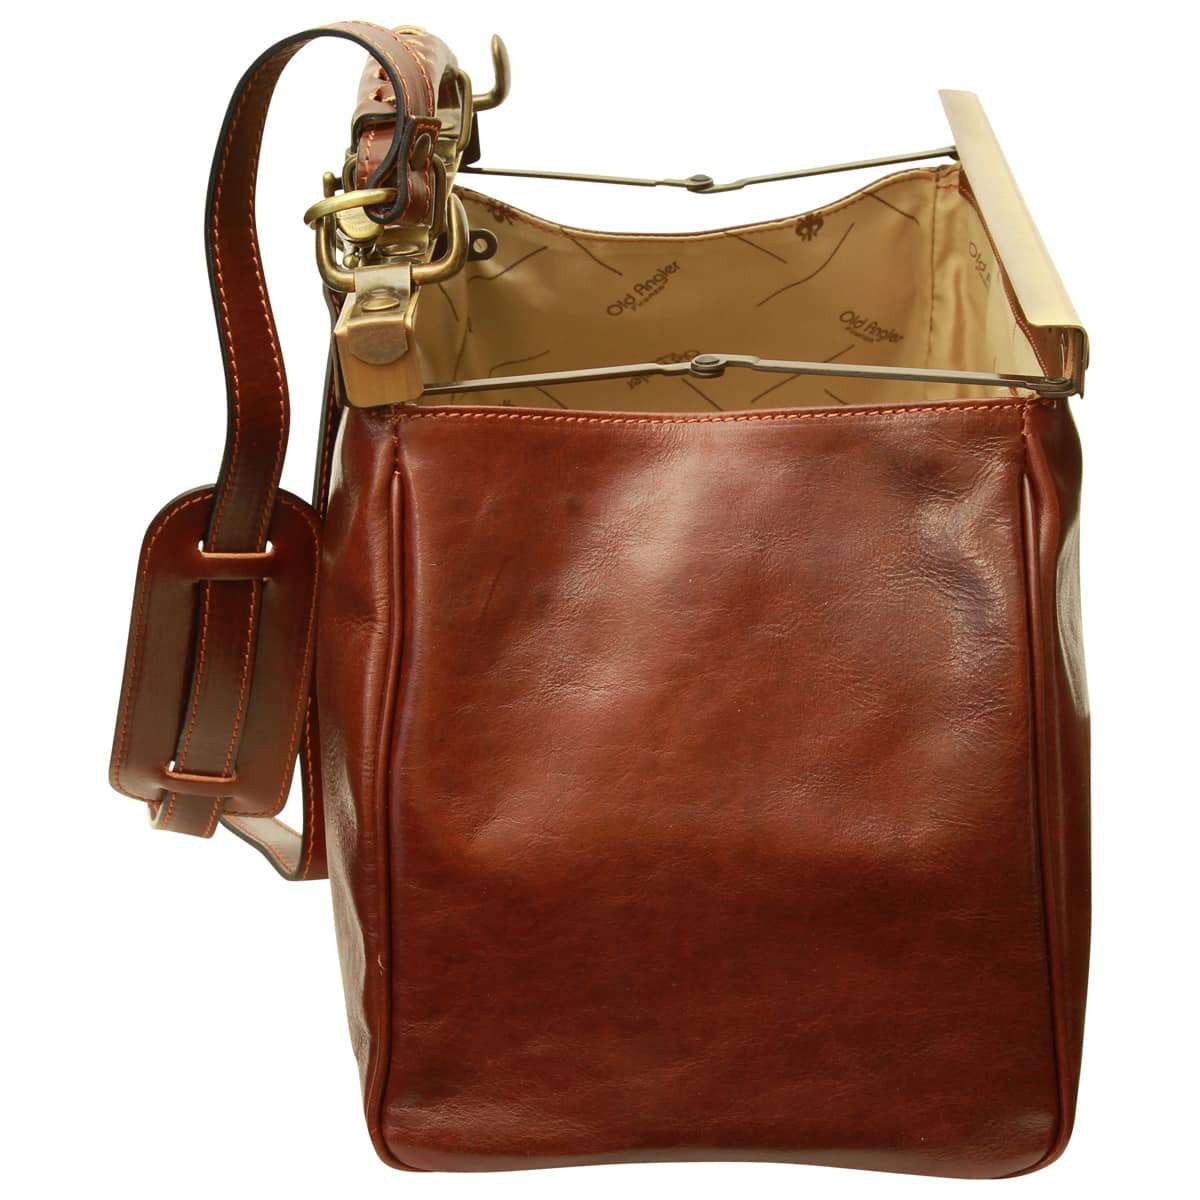 Leather bag - Brown | 084805MA UK | Old Angler Firenze